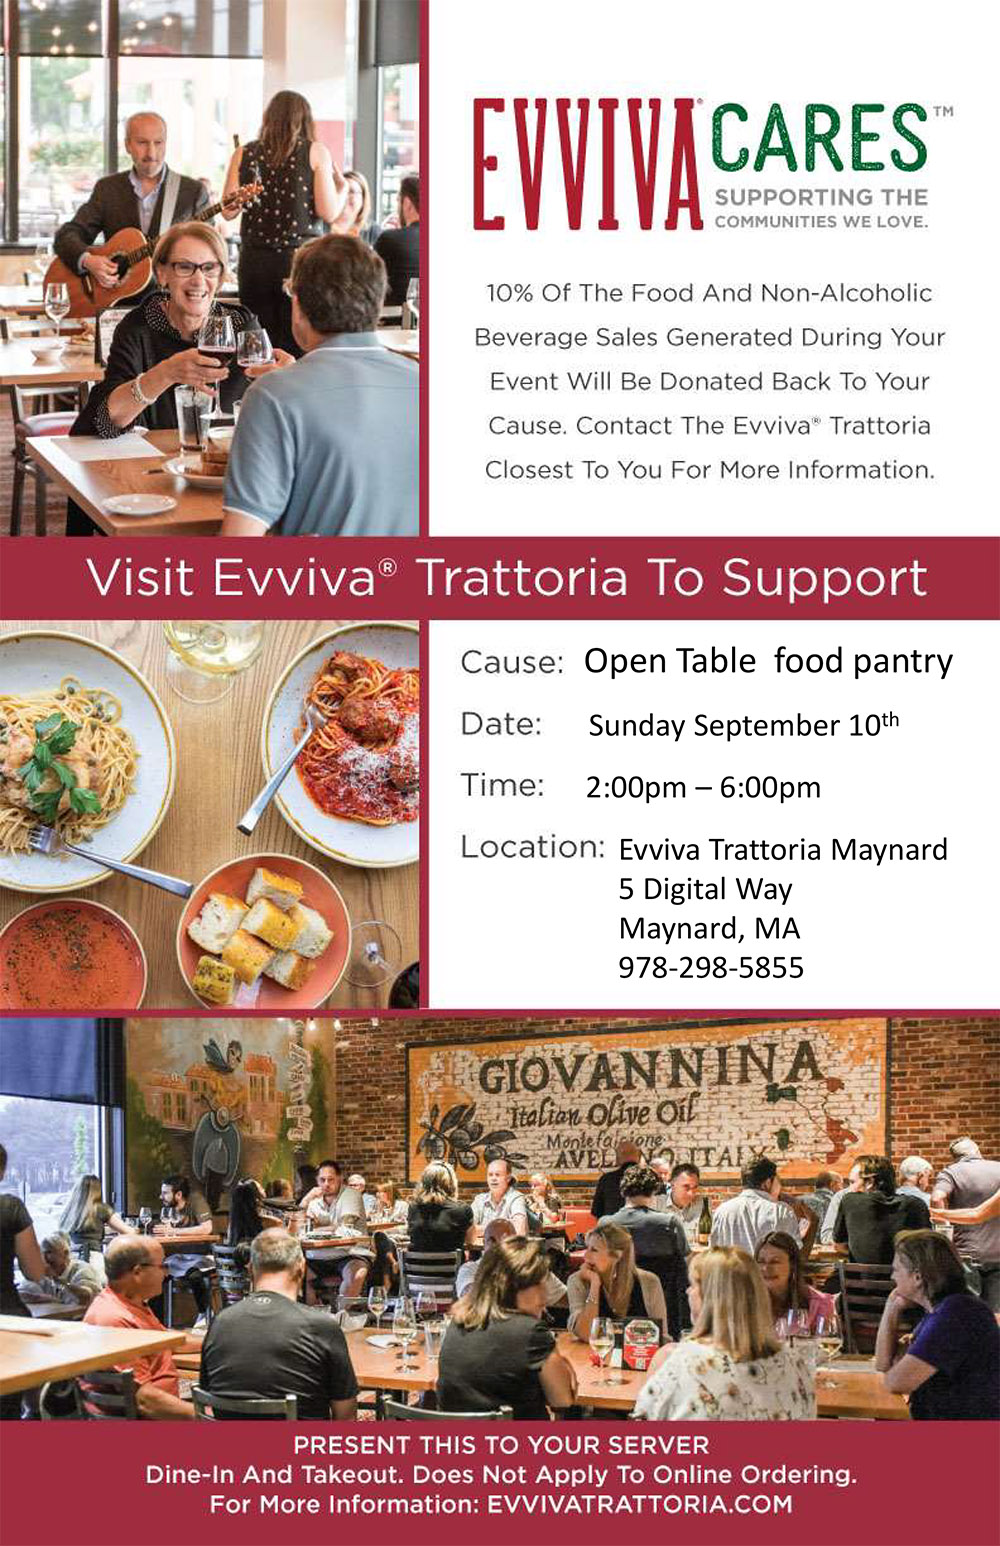 Evviva Cares Fundraiser for Open Table